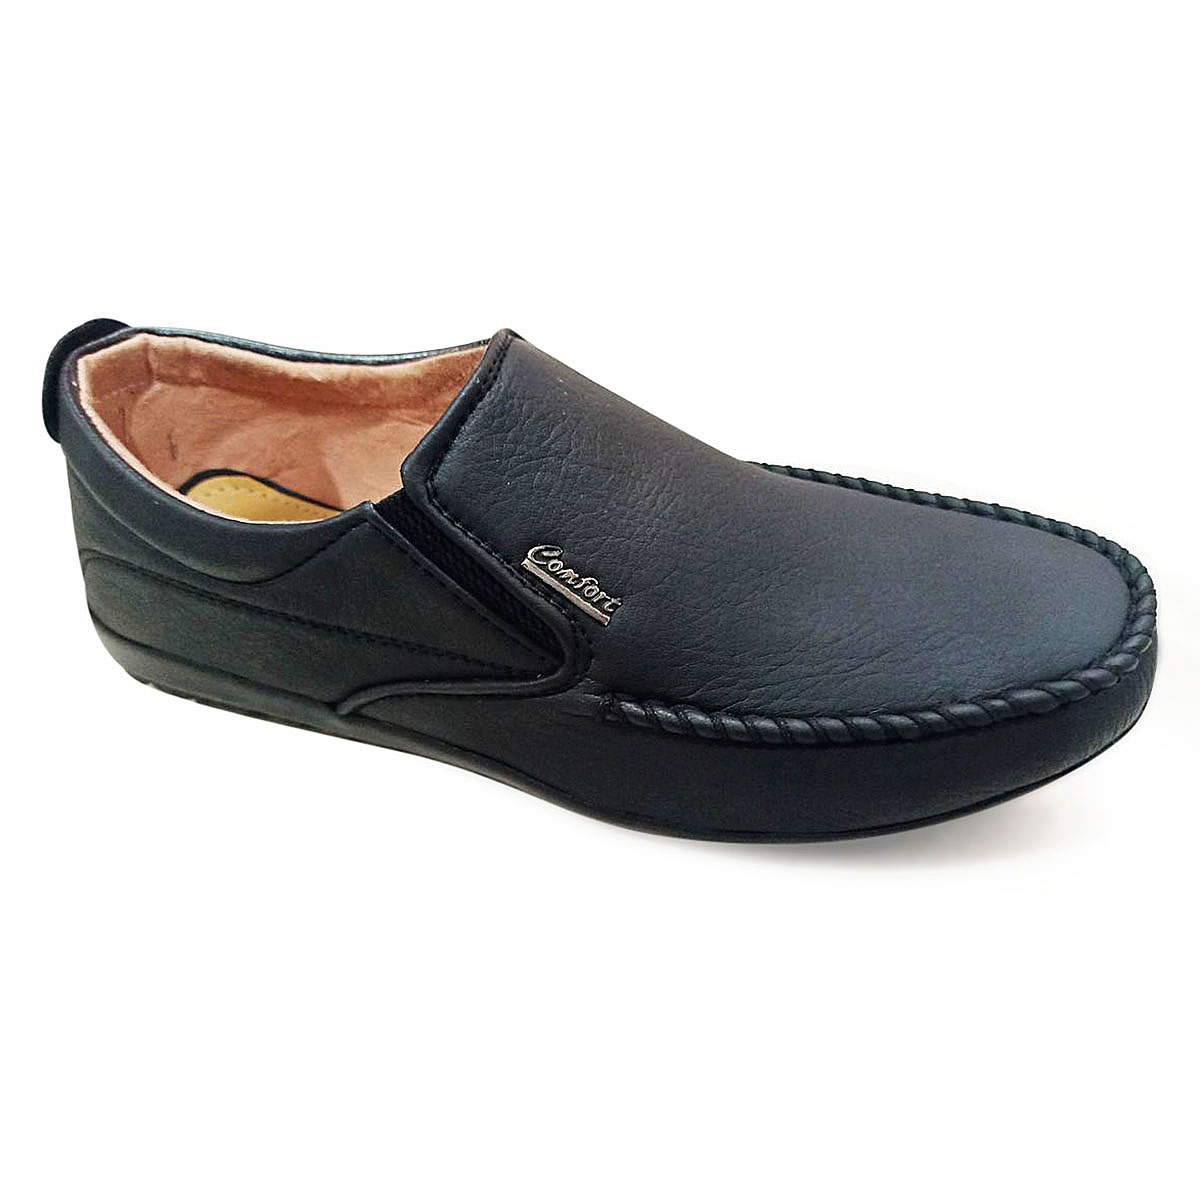 Black Artificial Leather Loafer shoe for Men